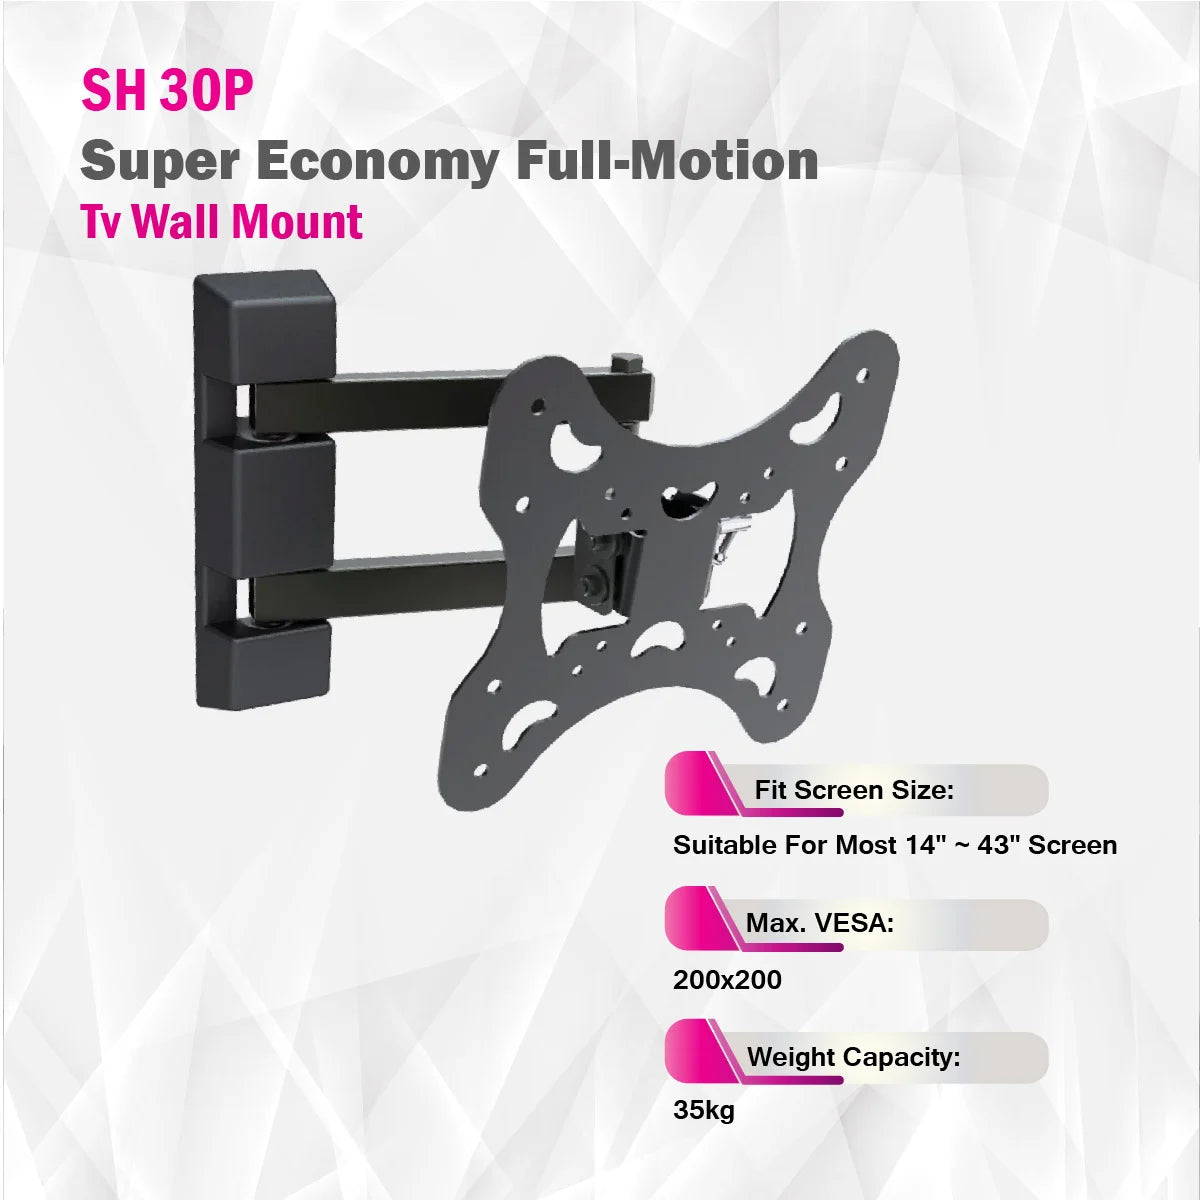 SkillTech - SH 30P - Super Economy Full-Motion Tv Wall Mount